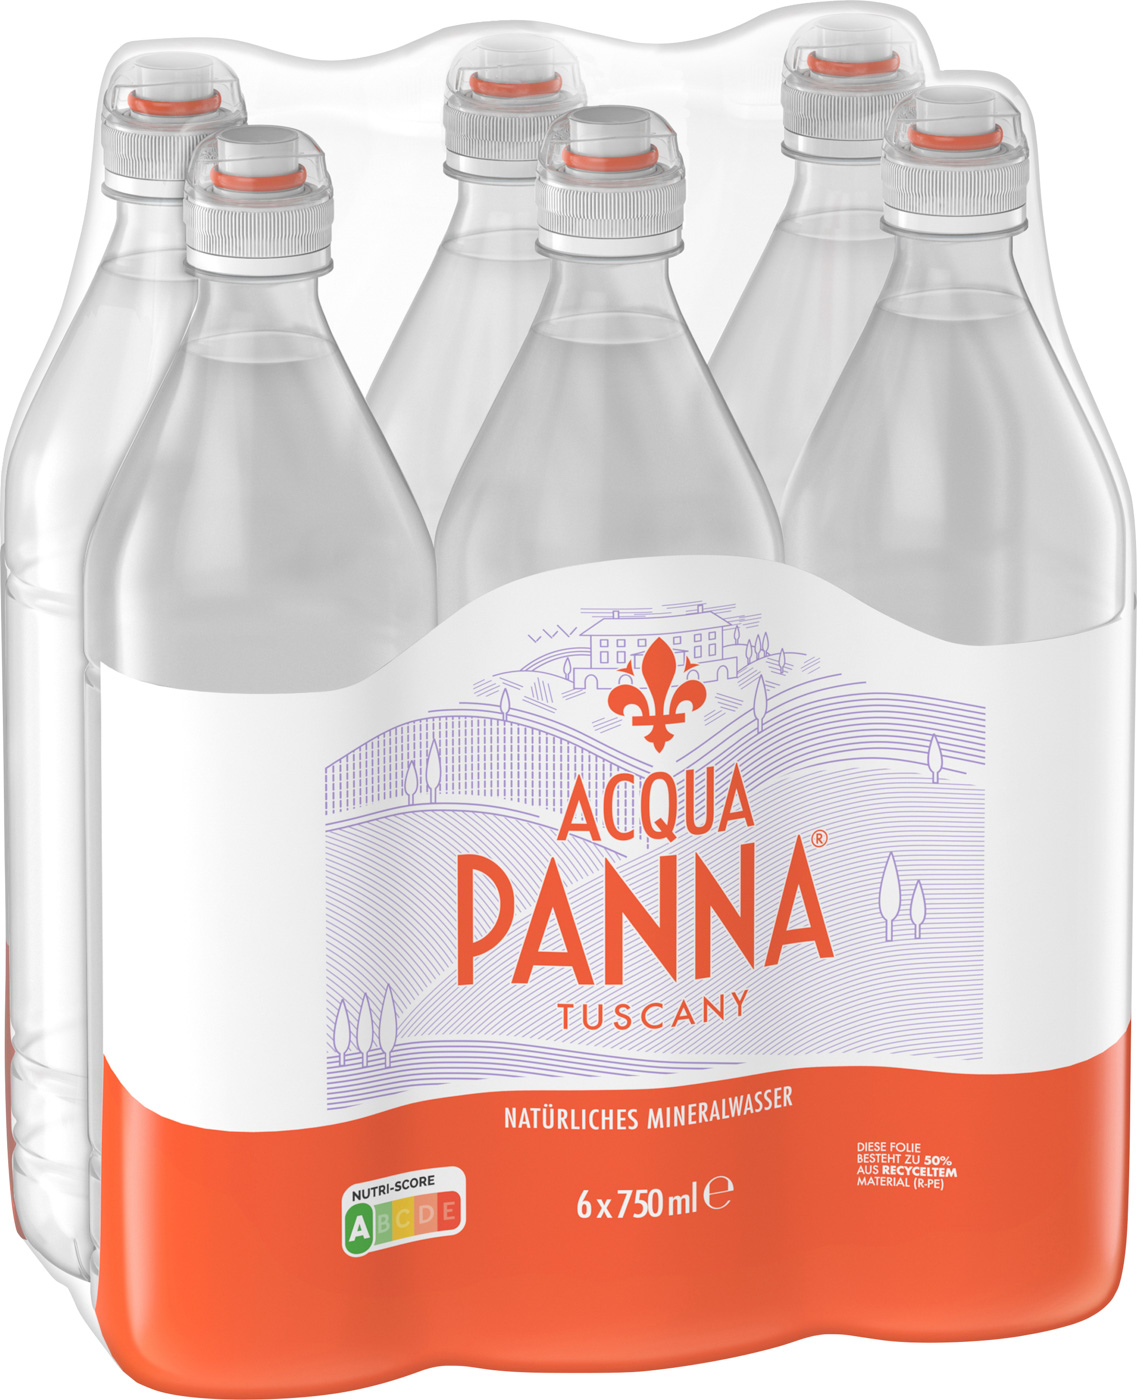 Acqua Panna Mineralwasser still PET 0,75L Flasche Mehrwegartikel (inkl. Pfand)